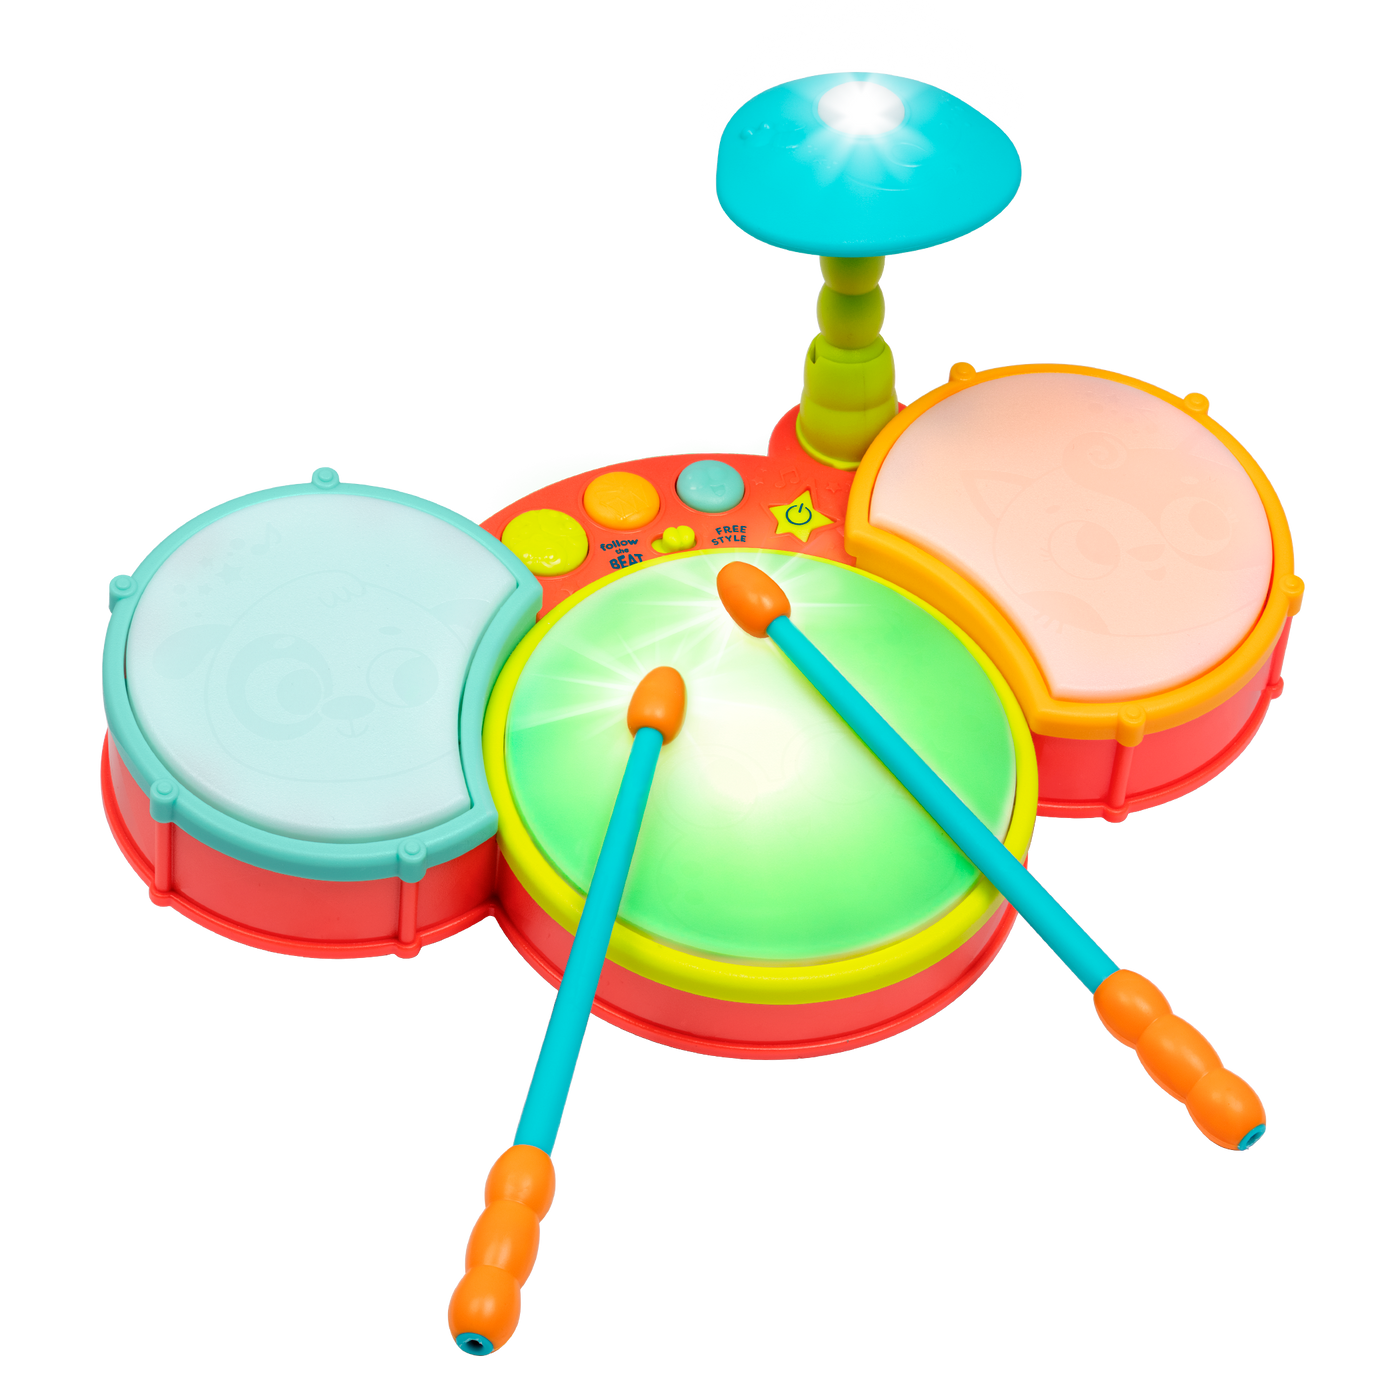 Light-up toy drum set.